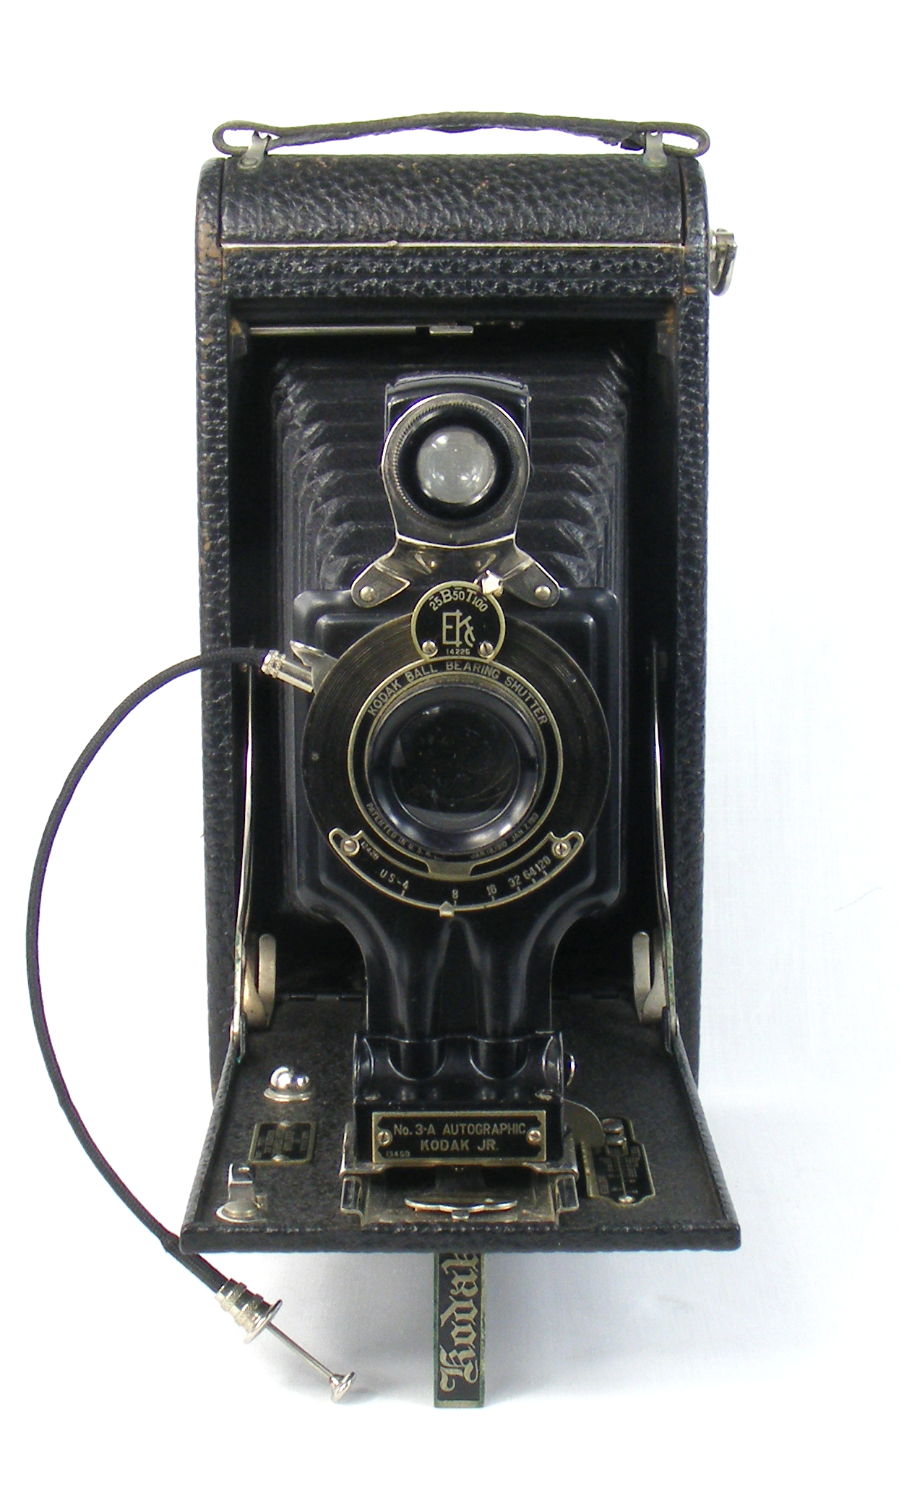 Image of No 3A Autographic Kodak Junior camera (front view)